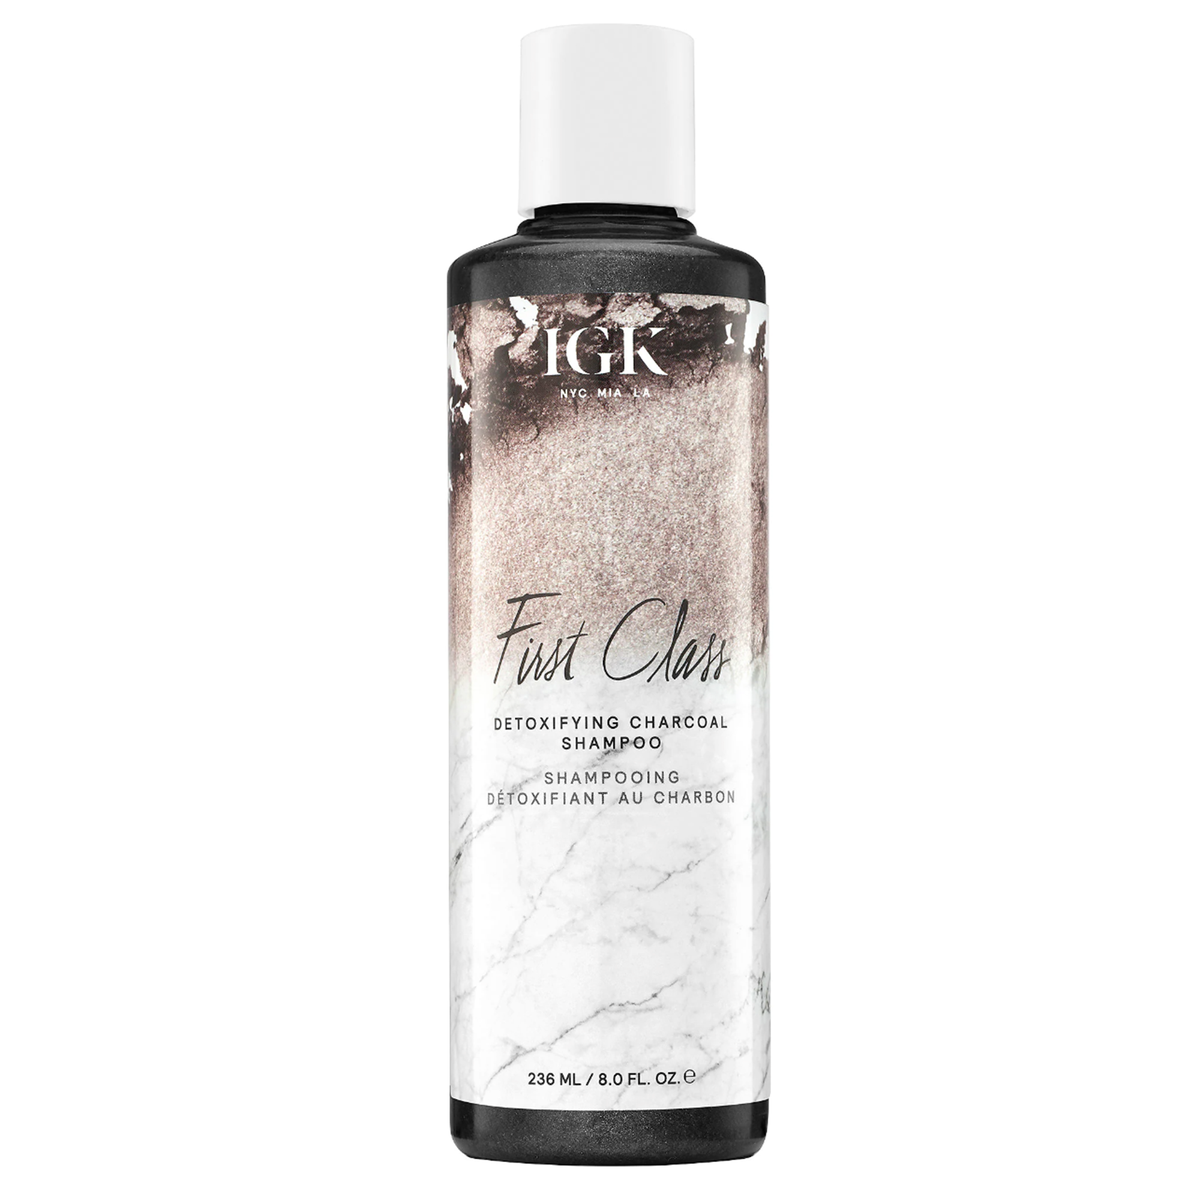 IGK Hair First Class Detoxifying Charcoal Shampoo at Socialite Beauty Canada